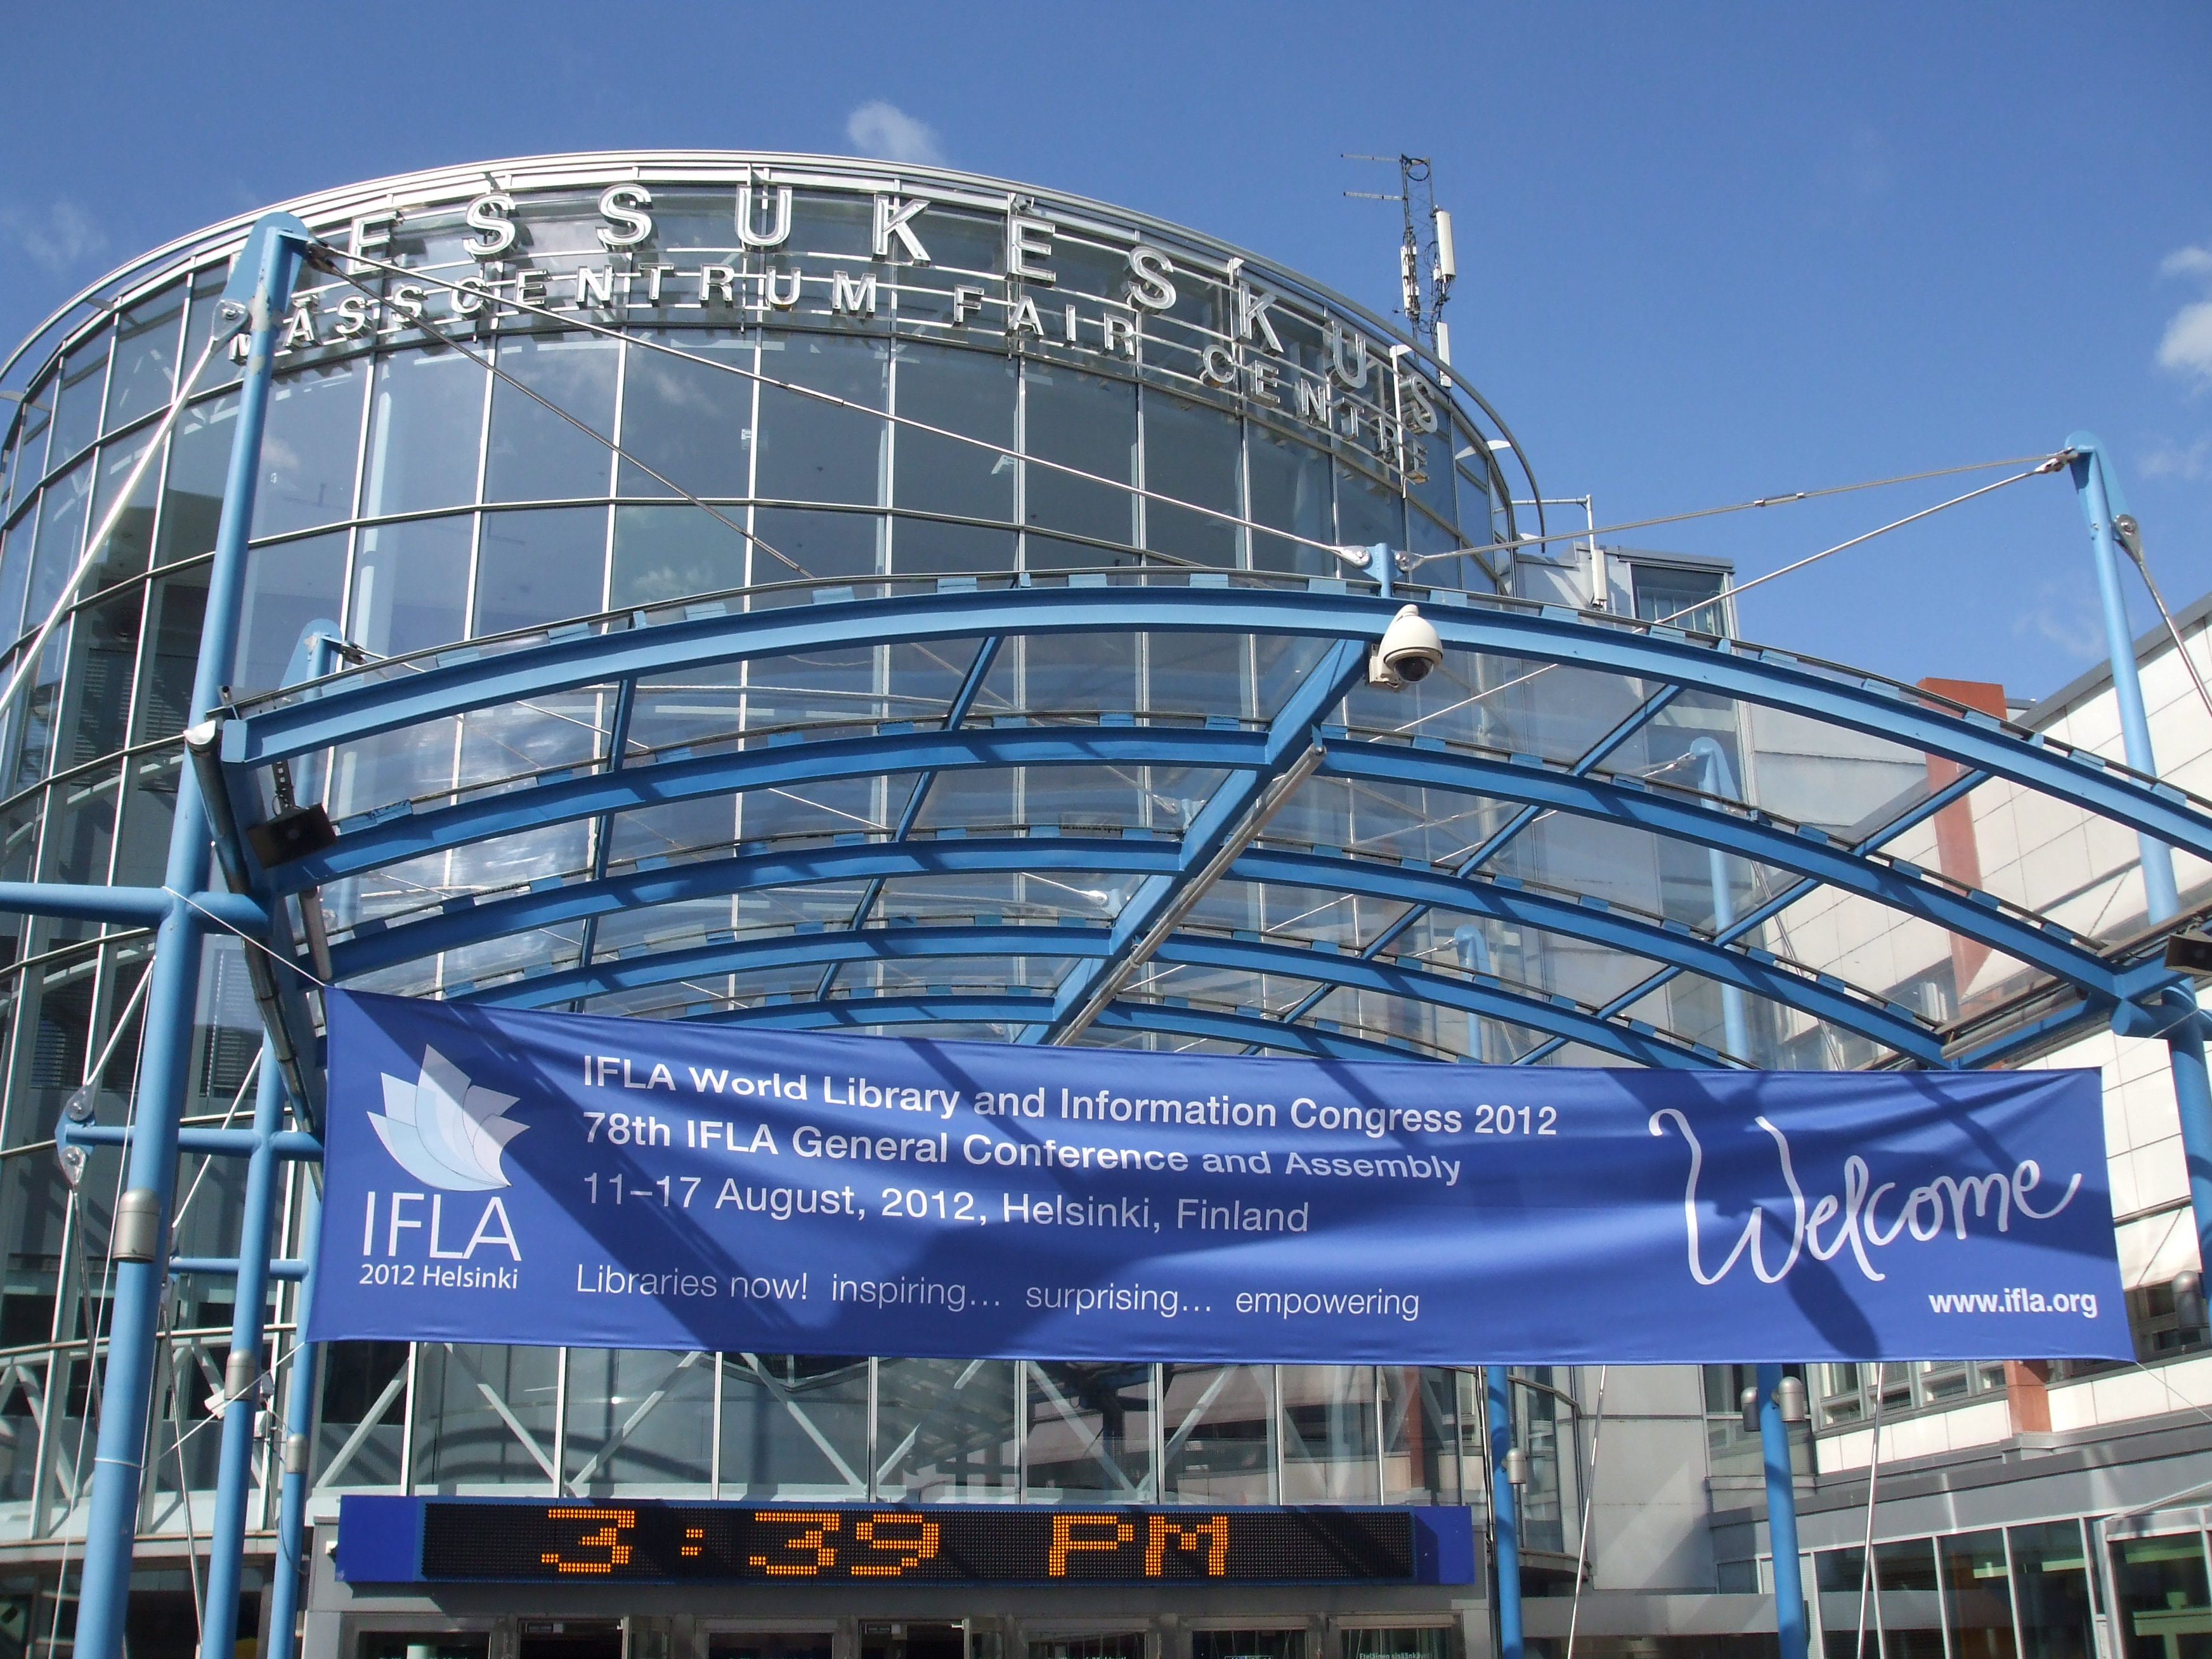 The Helsinki exhibition center welcomes IFLA delegates.